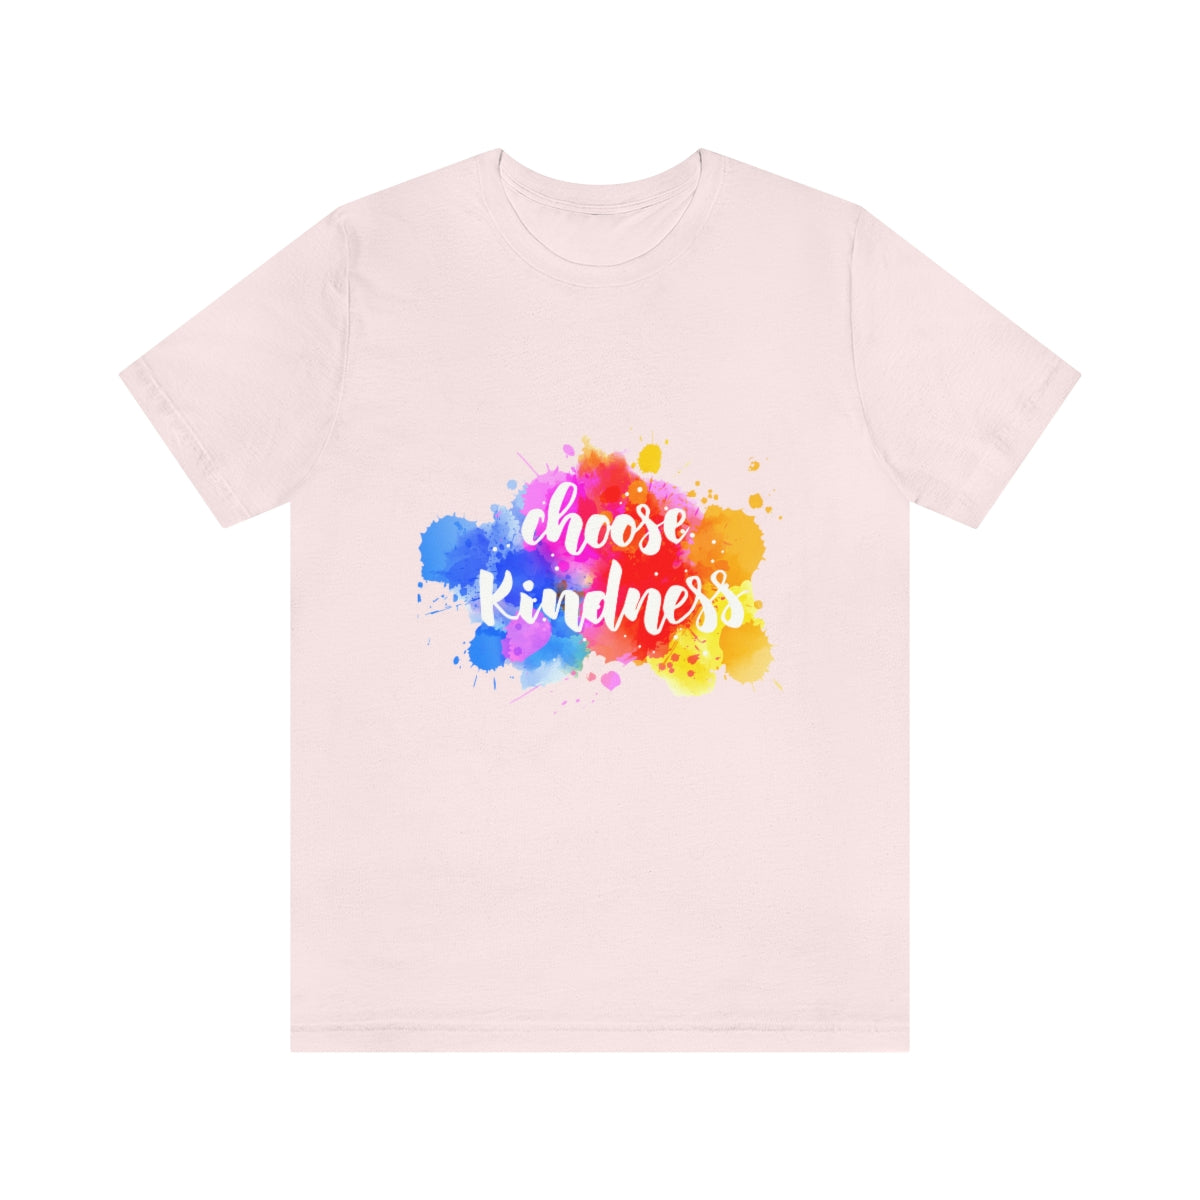 Unisex Jersey Short Sleeve Tee "Pink shirt DAY Choose kindness"